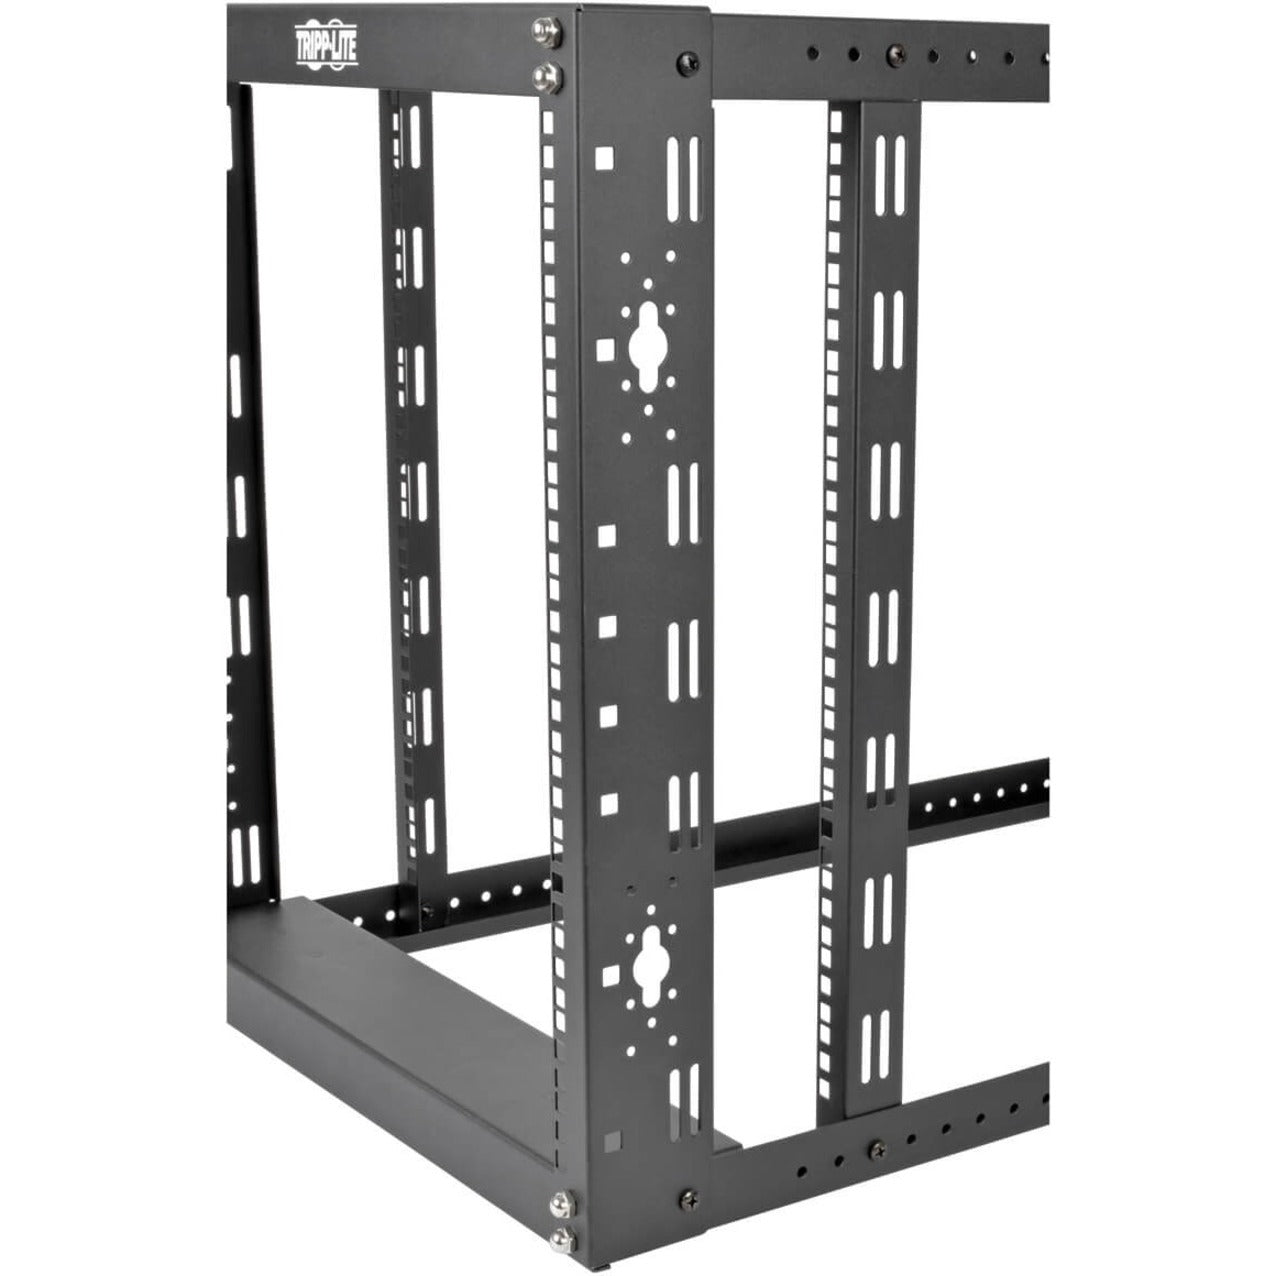 Tripp Lite SR12UBEXPNDKD SmartRack 12U 4-Post Open Frame Rack, 1000 lb Weight Capacity, Black Powder Coat